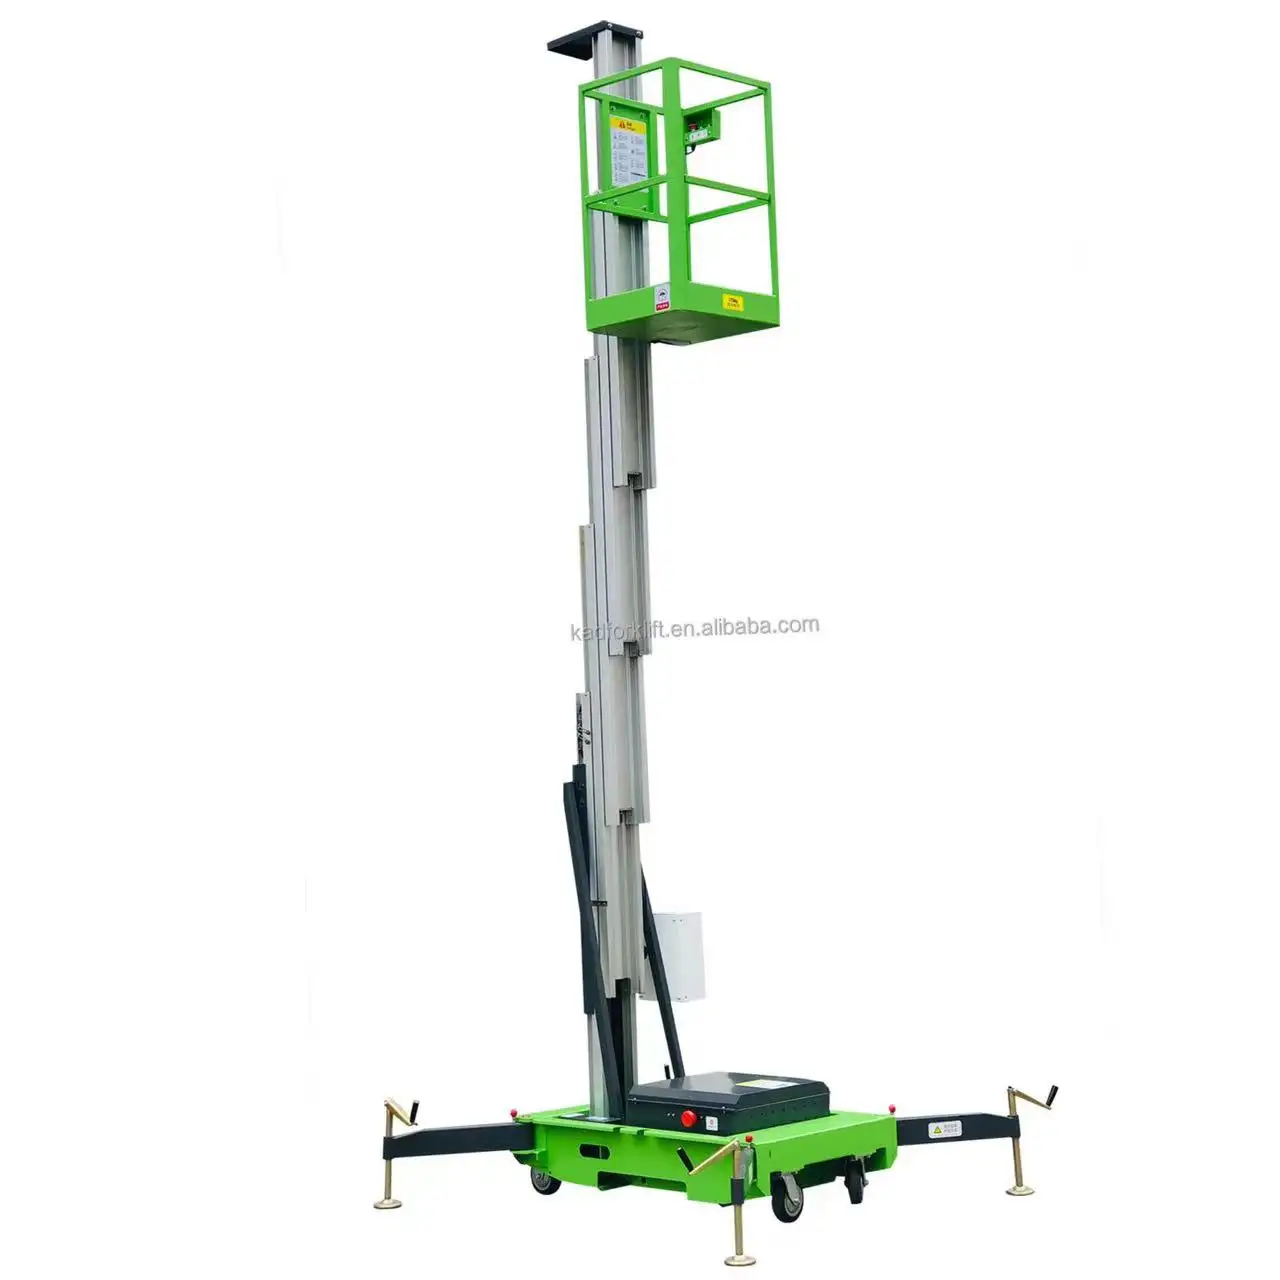 9m Portable Vertical Hydraulic Single Mast Electric Manned Aluminum Alloy Lifting Platform